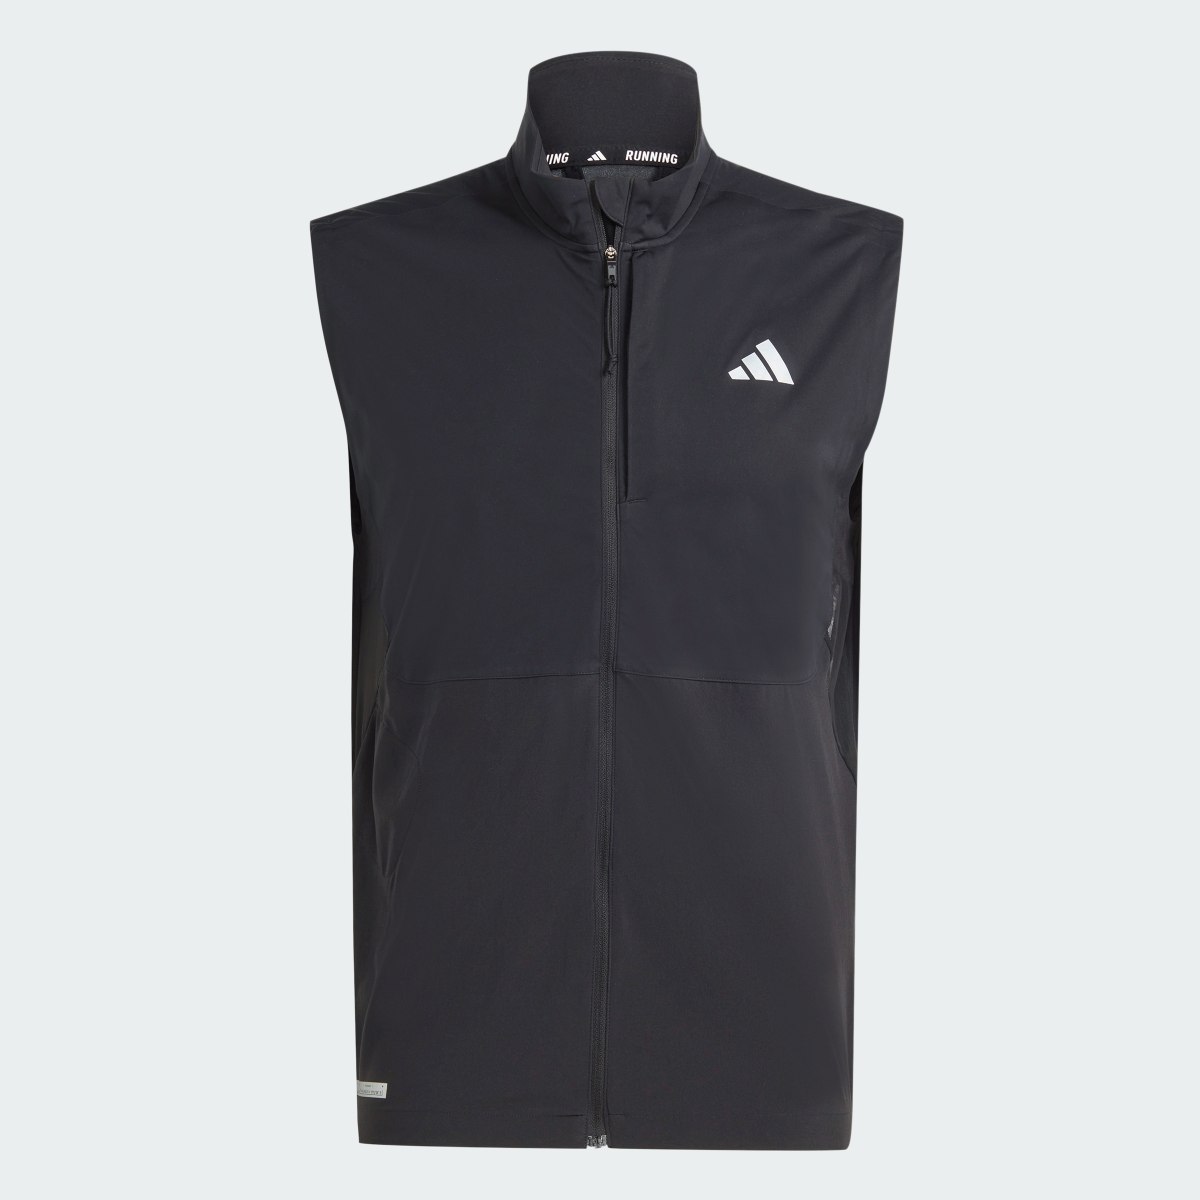 Adidas Ultimate Vest. 5